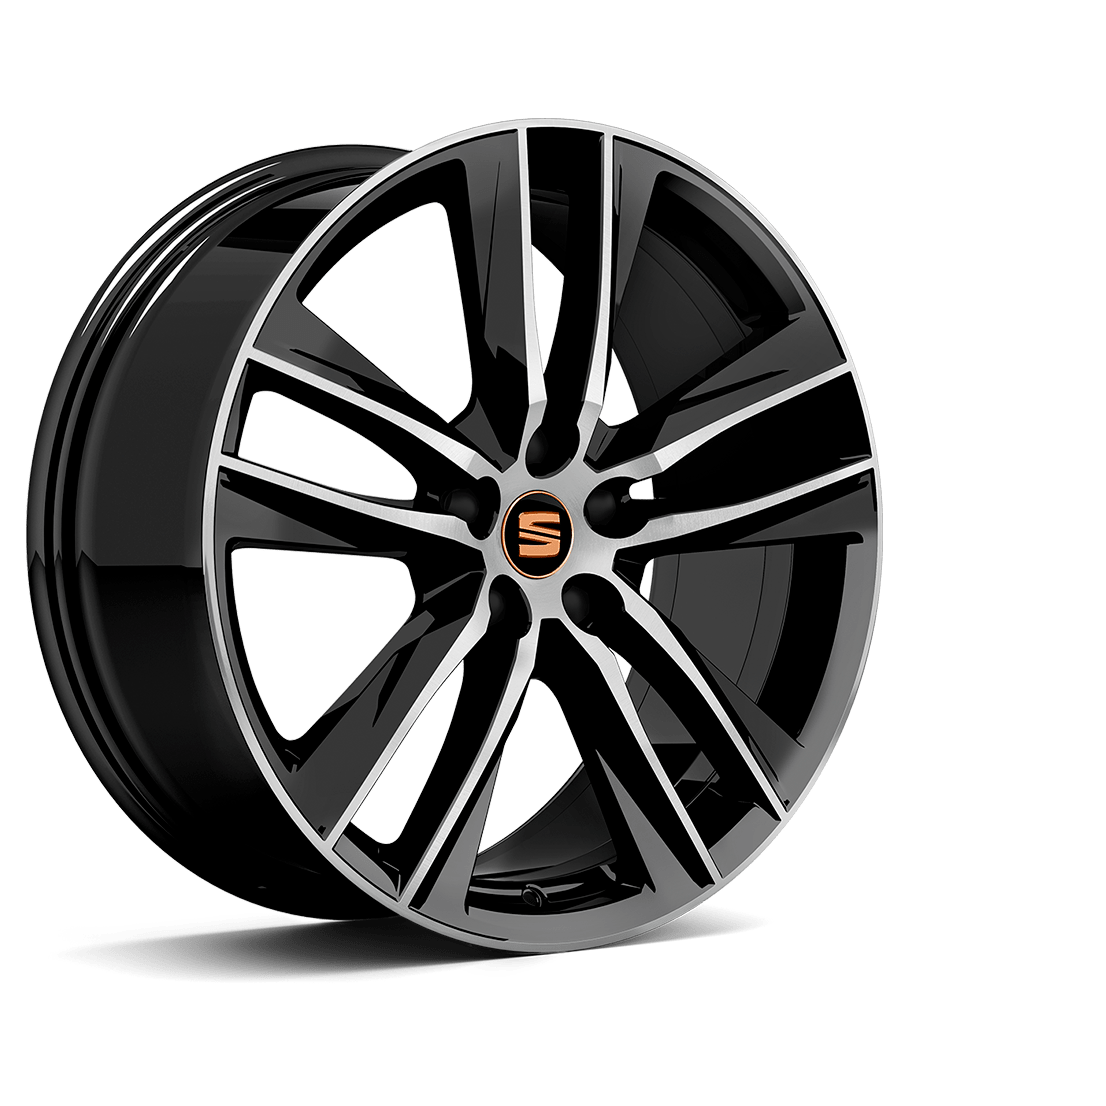 Leon CUPRA 19” alloy wheels